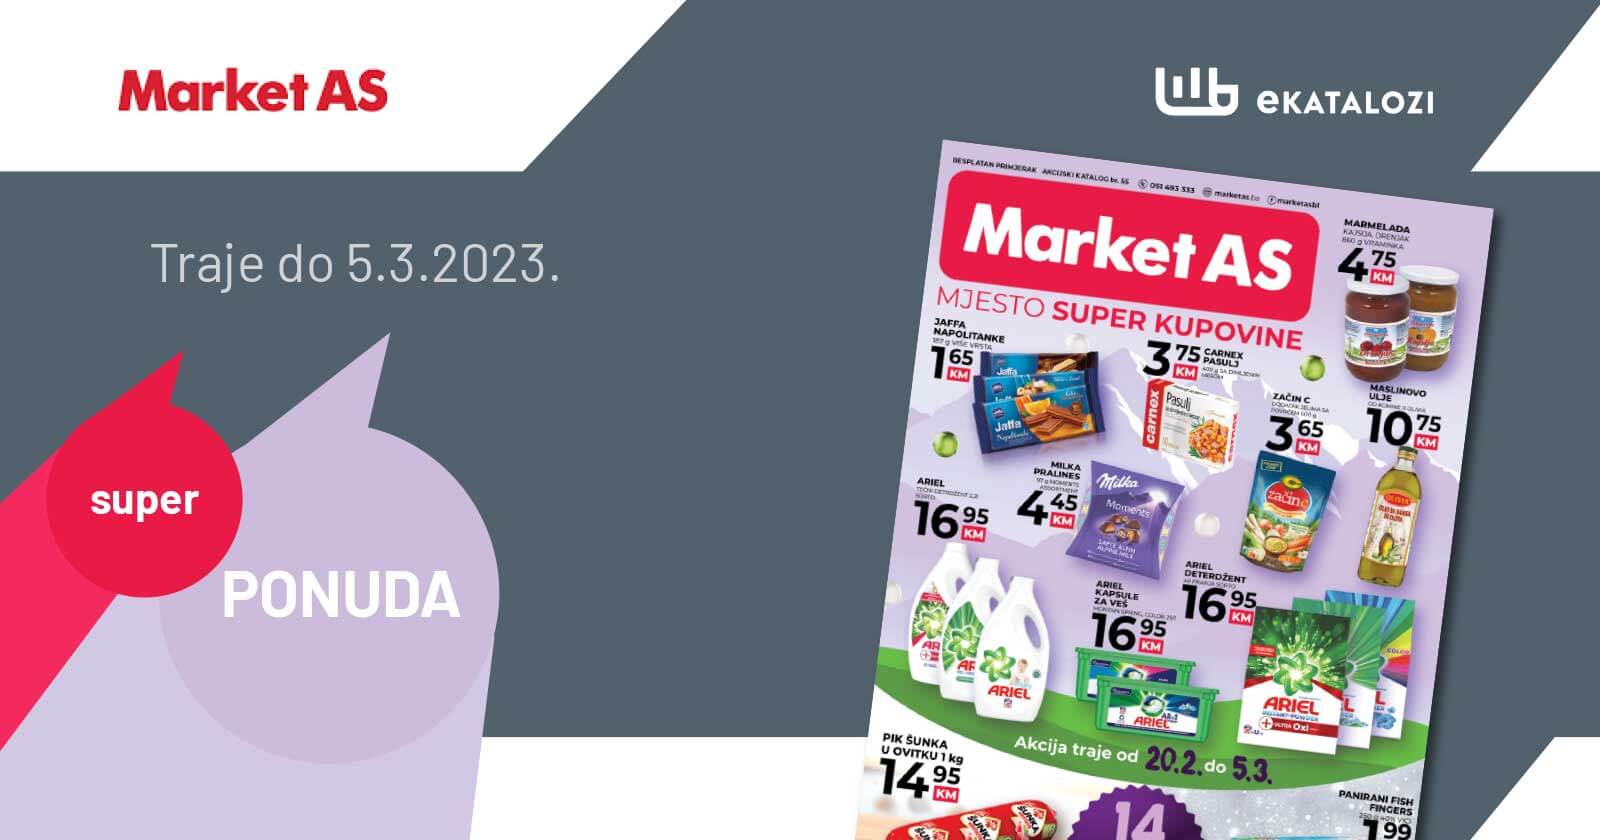 market as katalog februar i mart 2023. akcija traje od 20.2. do 5.3.2023. market as katalog